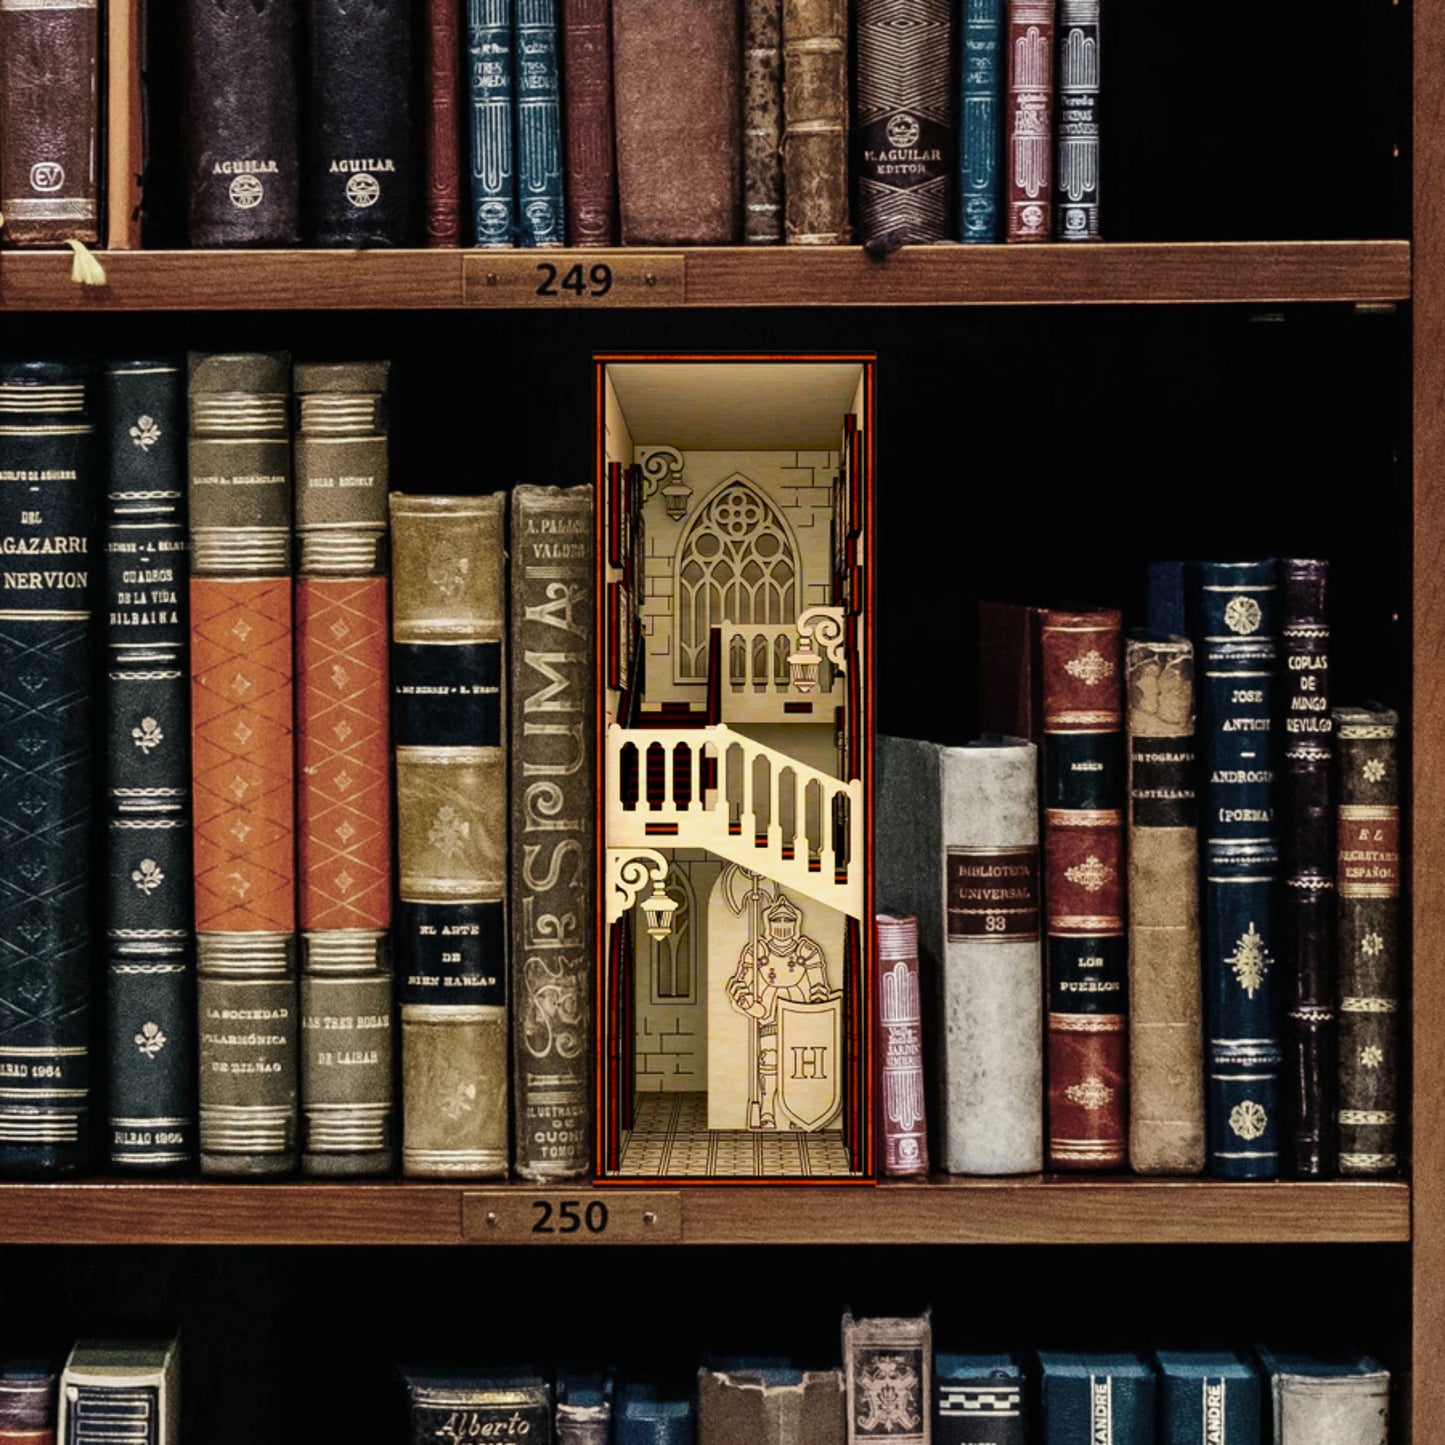 Enchanting Miniature Castle Book Nook for Your Bookshelf – Glowforge Shop